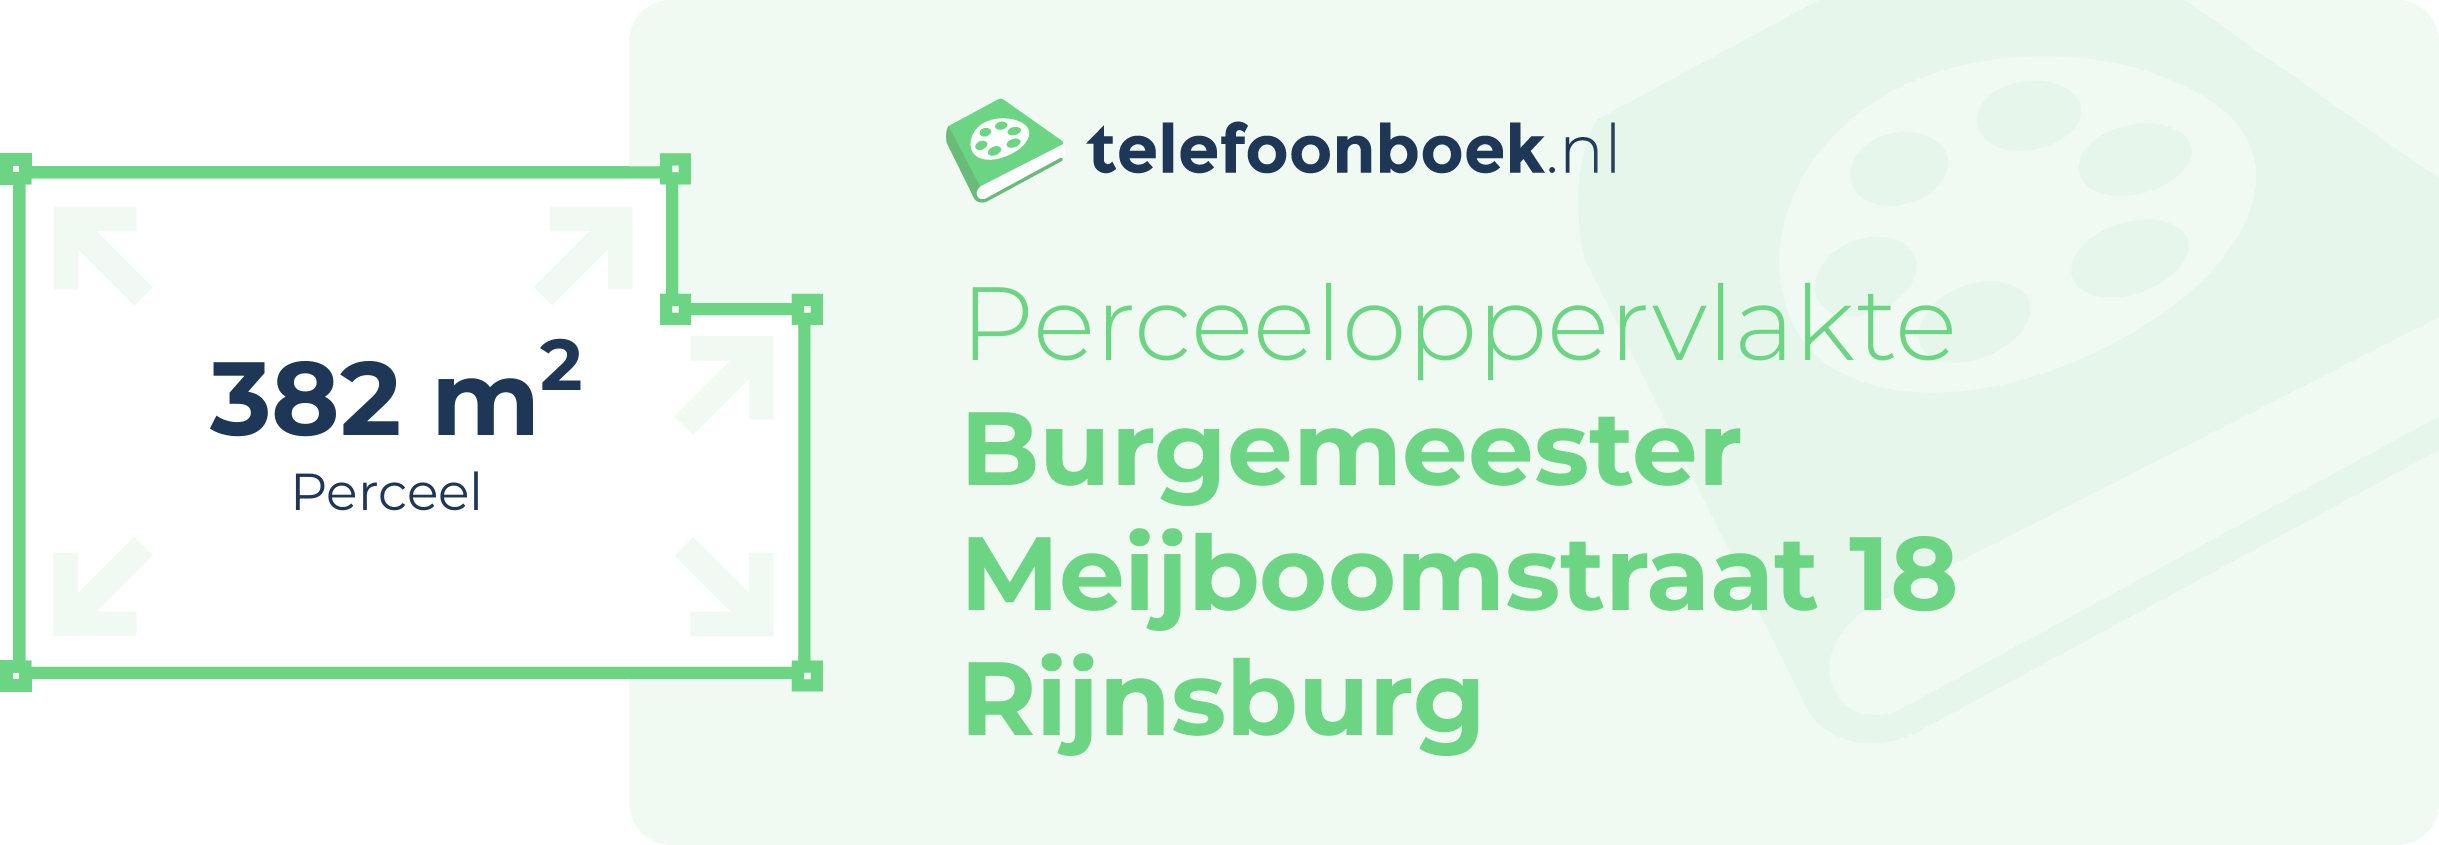 Perceeloppervlakte Burgemeester Meijboomstraat 18 Rijnsburg